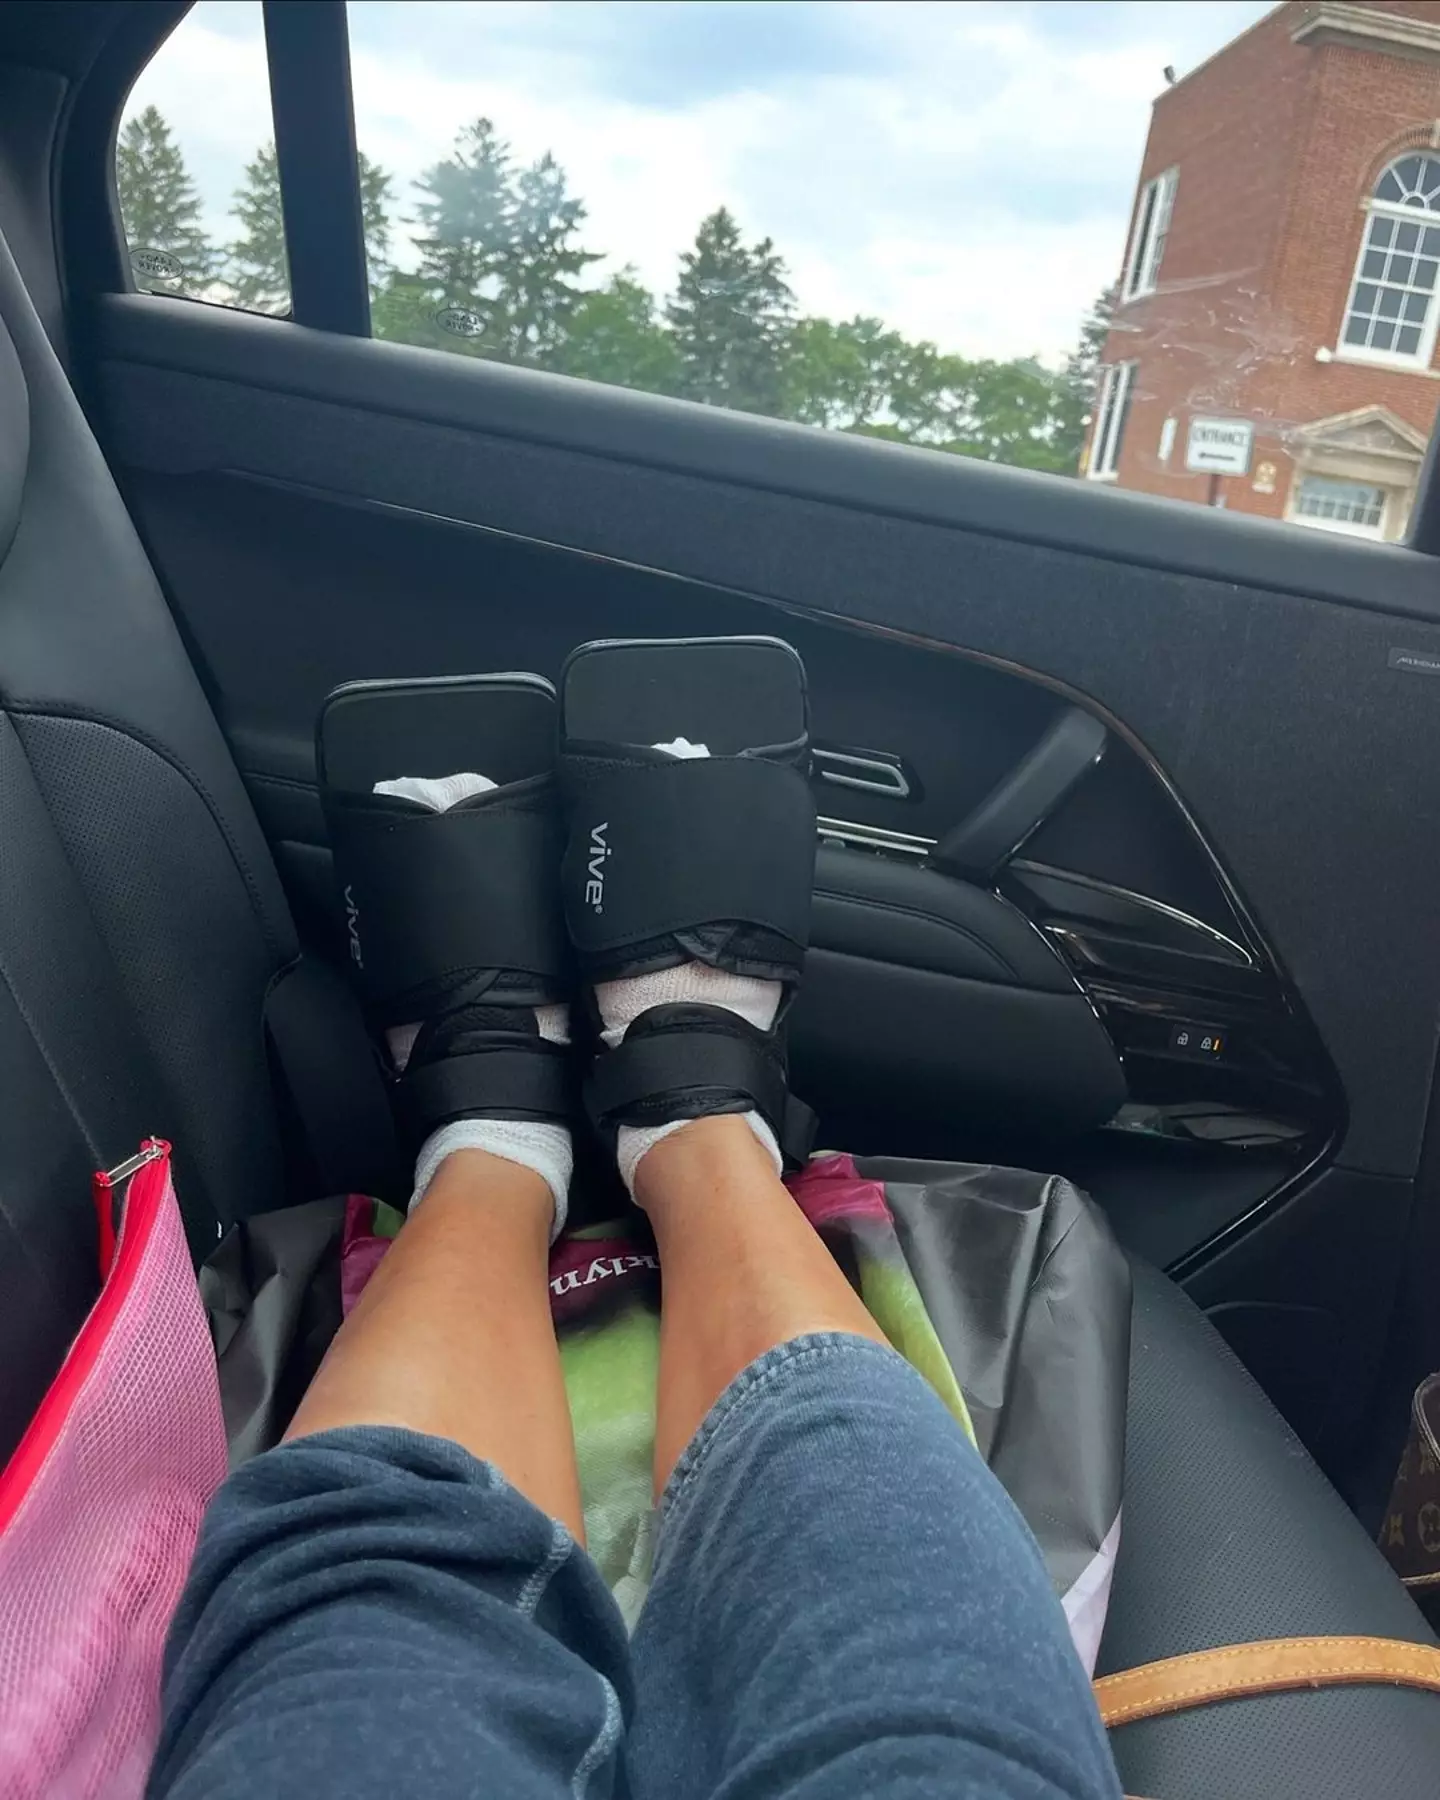 Brooke has undergone toe surgery. (Instagram/@brookeshields)